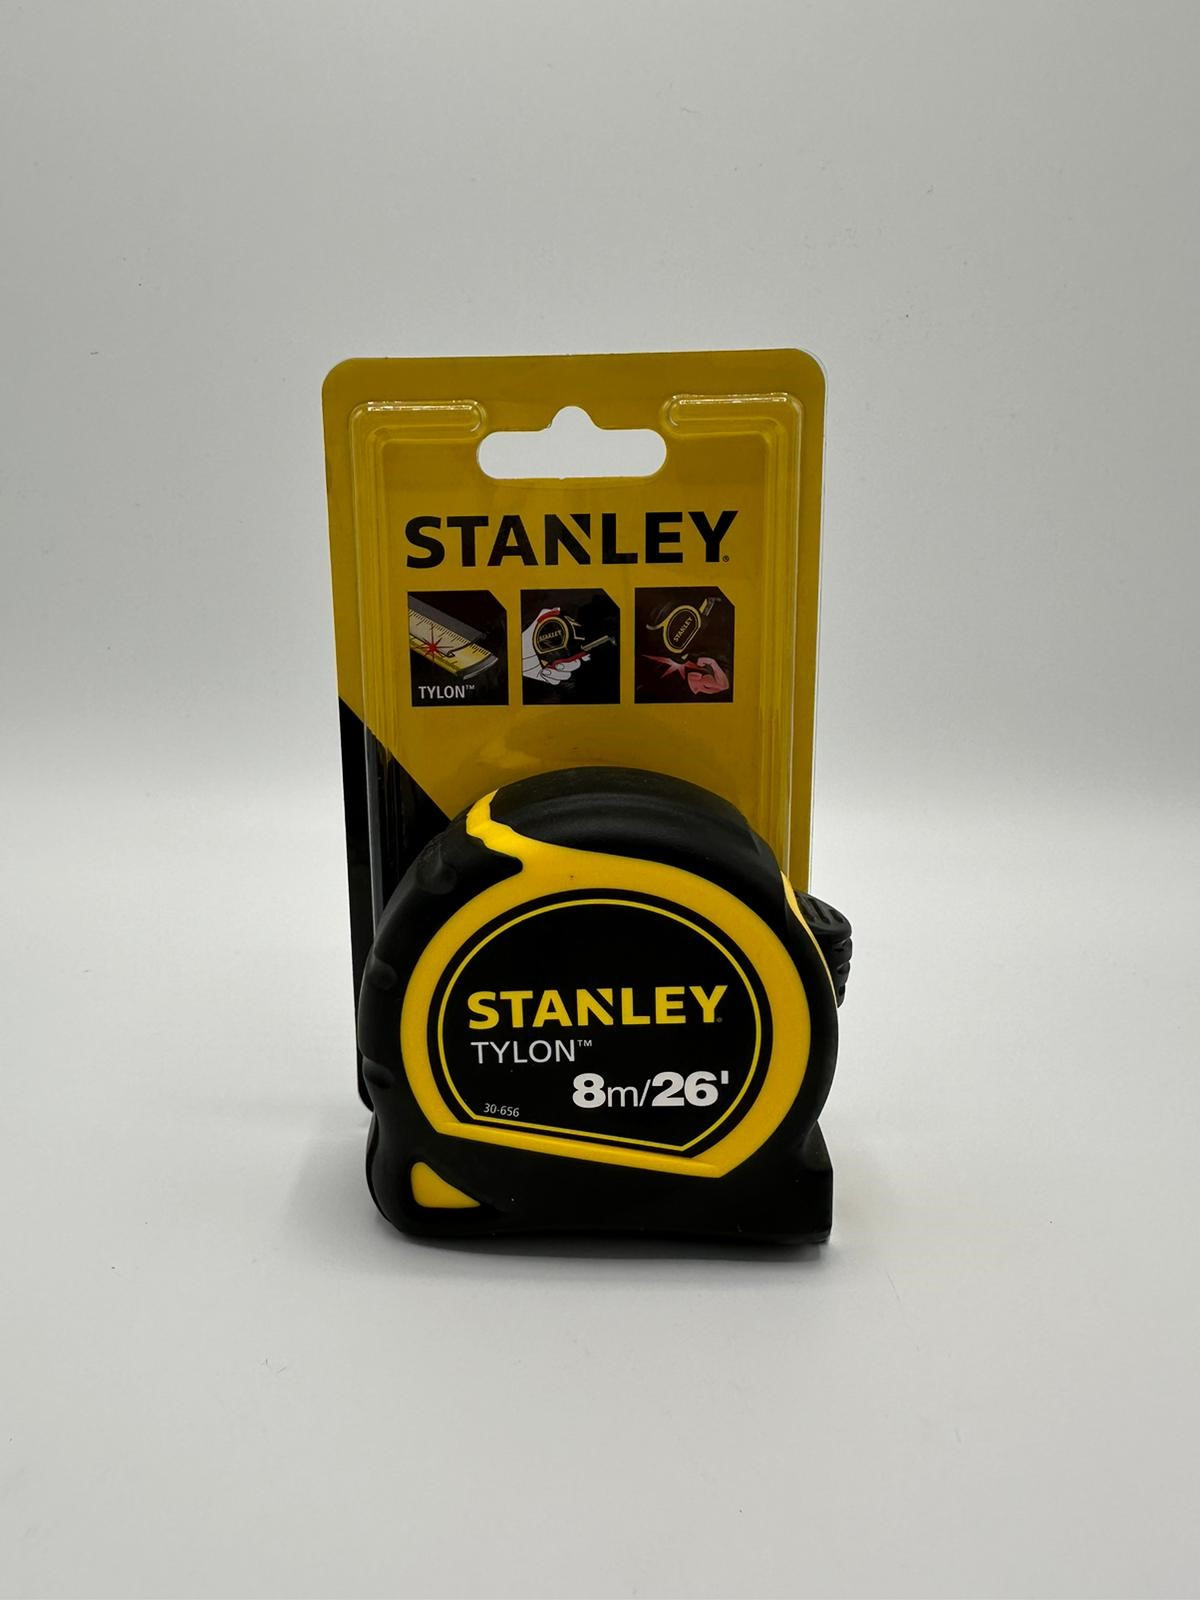 Stanley Tape 8m/26'